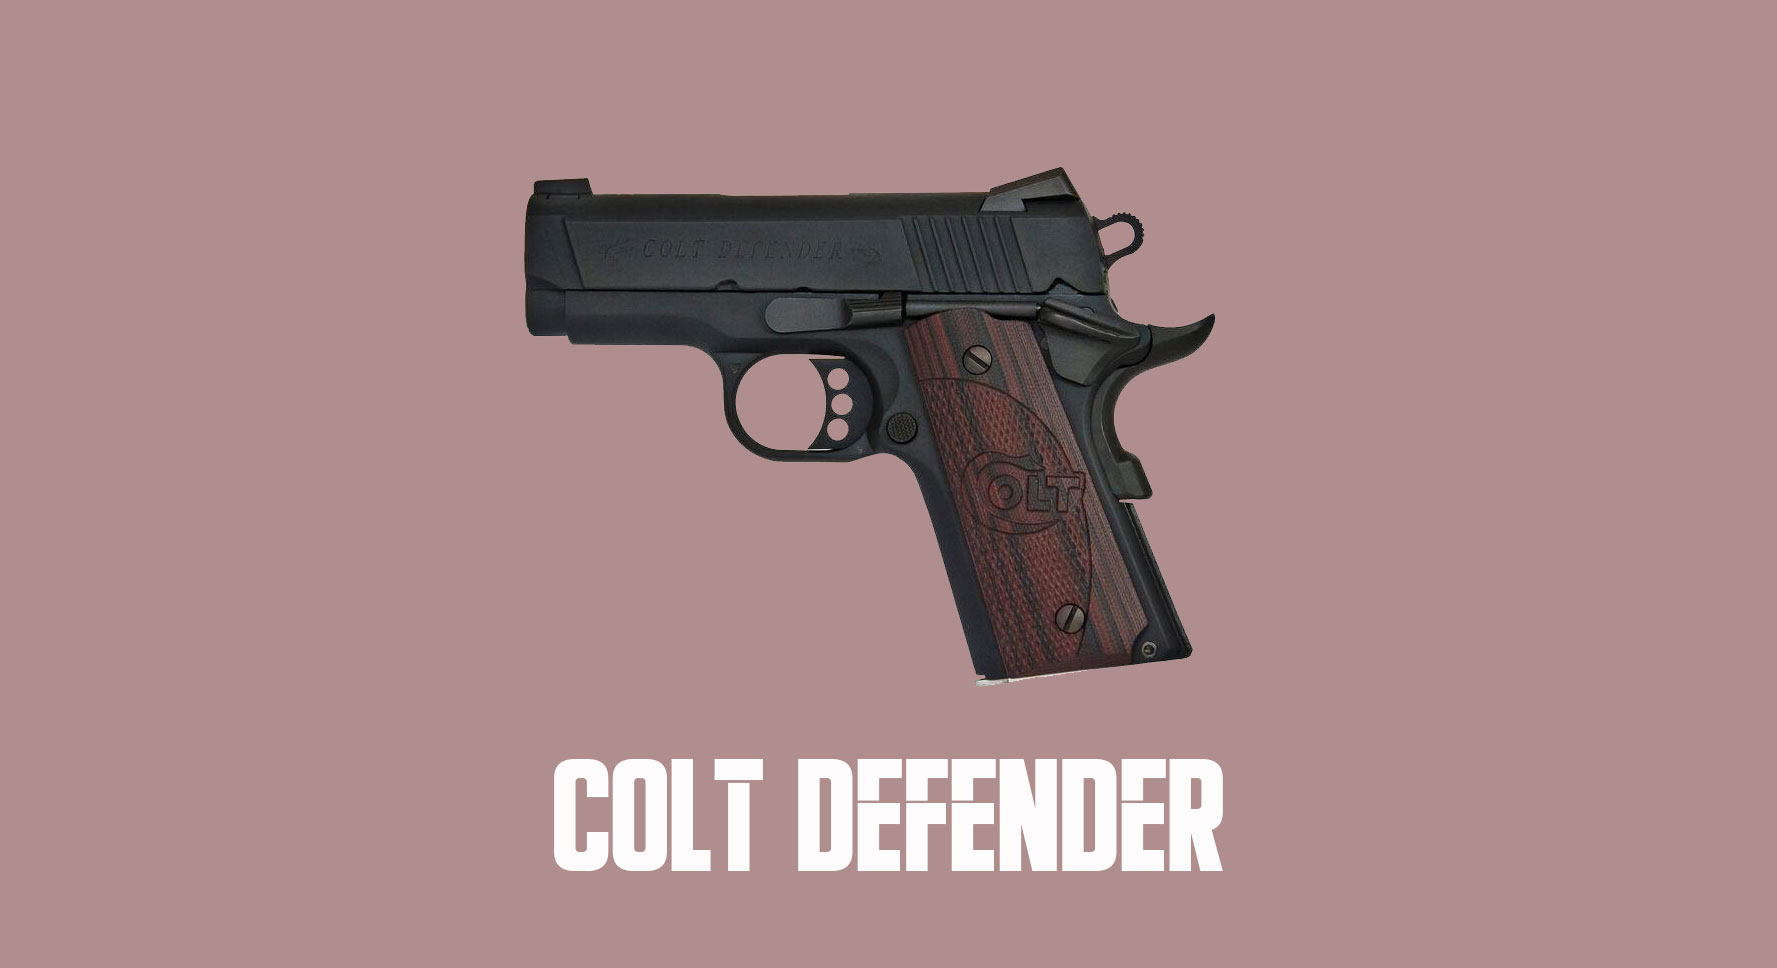 the colt defender pistol in 45 acp